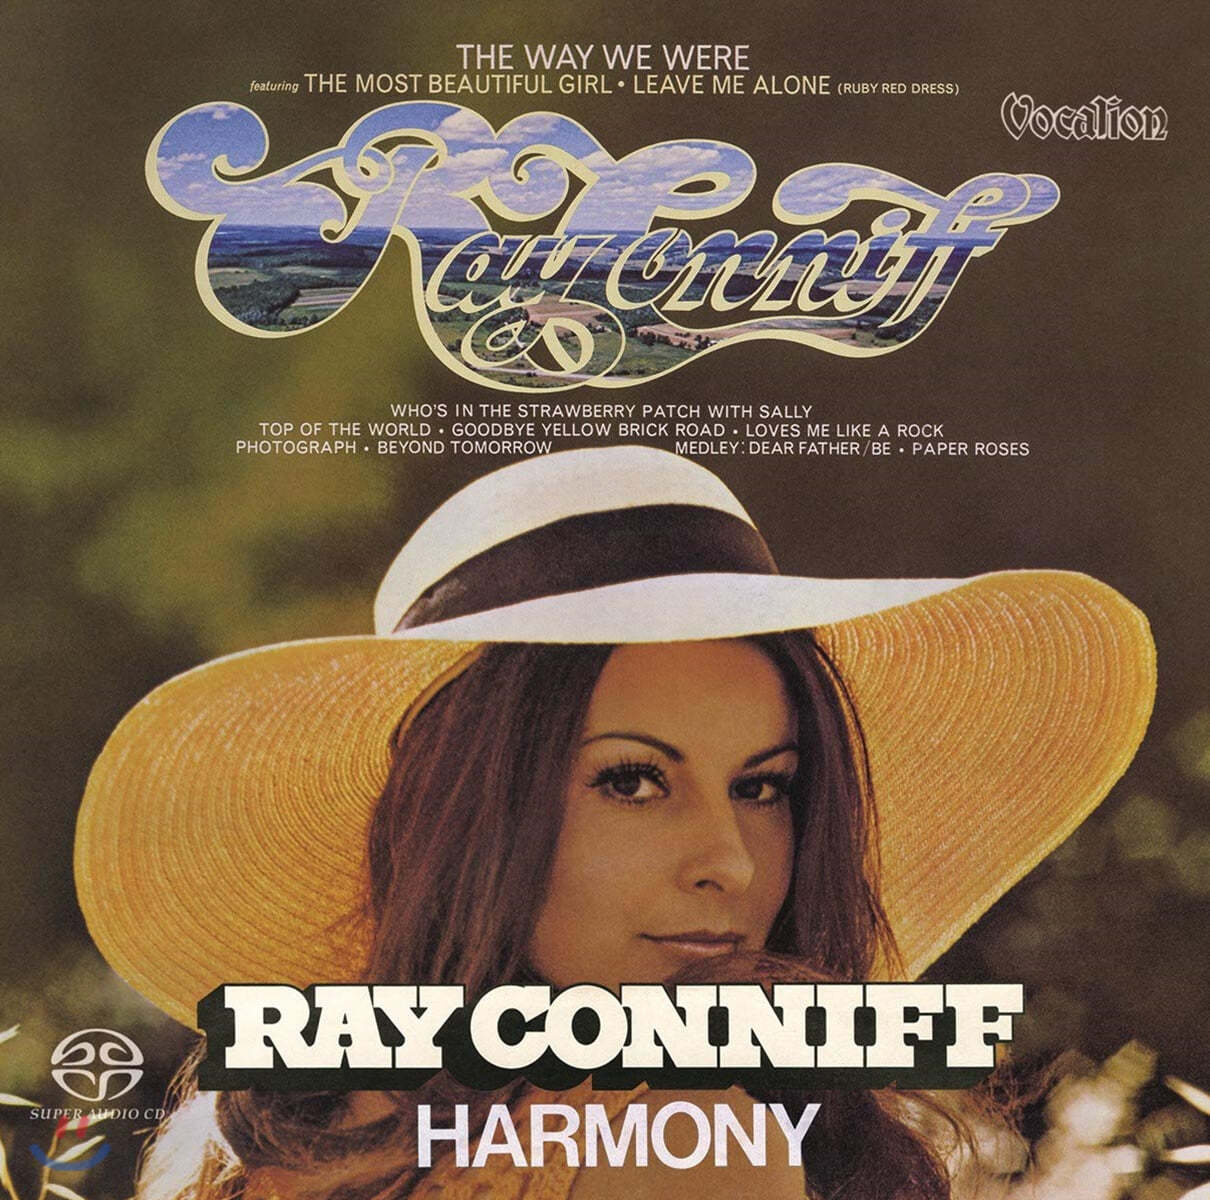 Ray Conniff (레이 코니프) - Harmony & The Way We Were (Original Analog ...